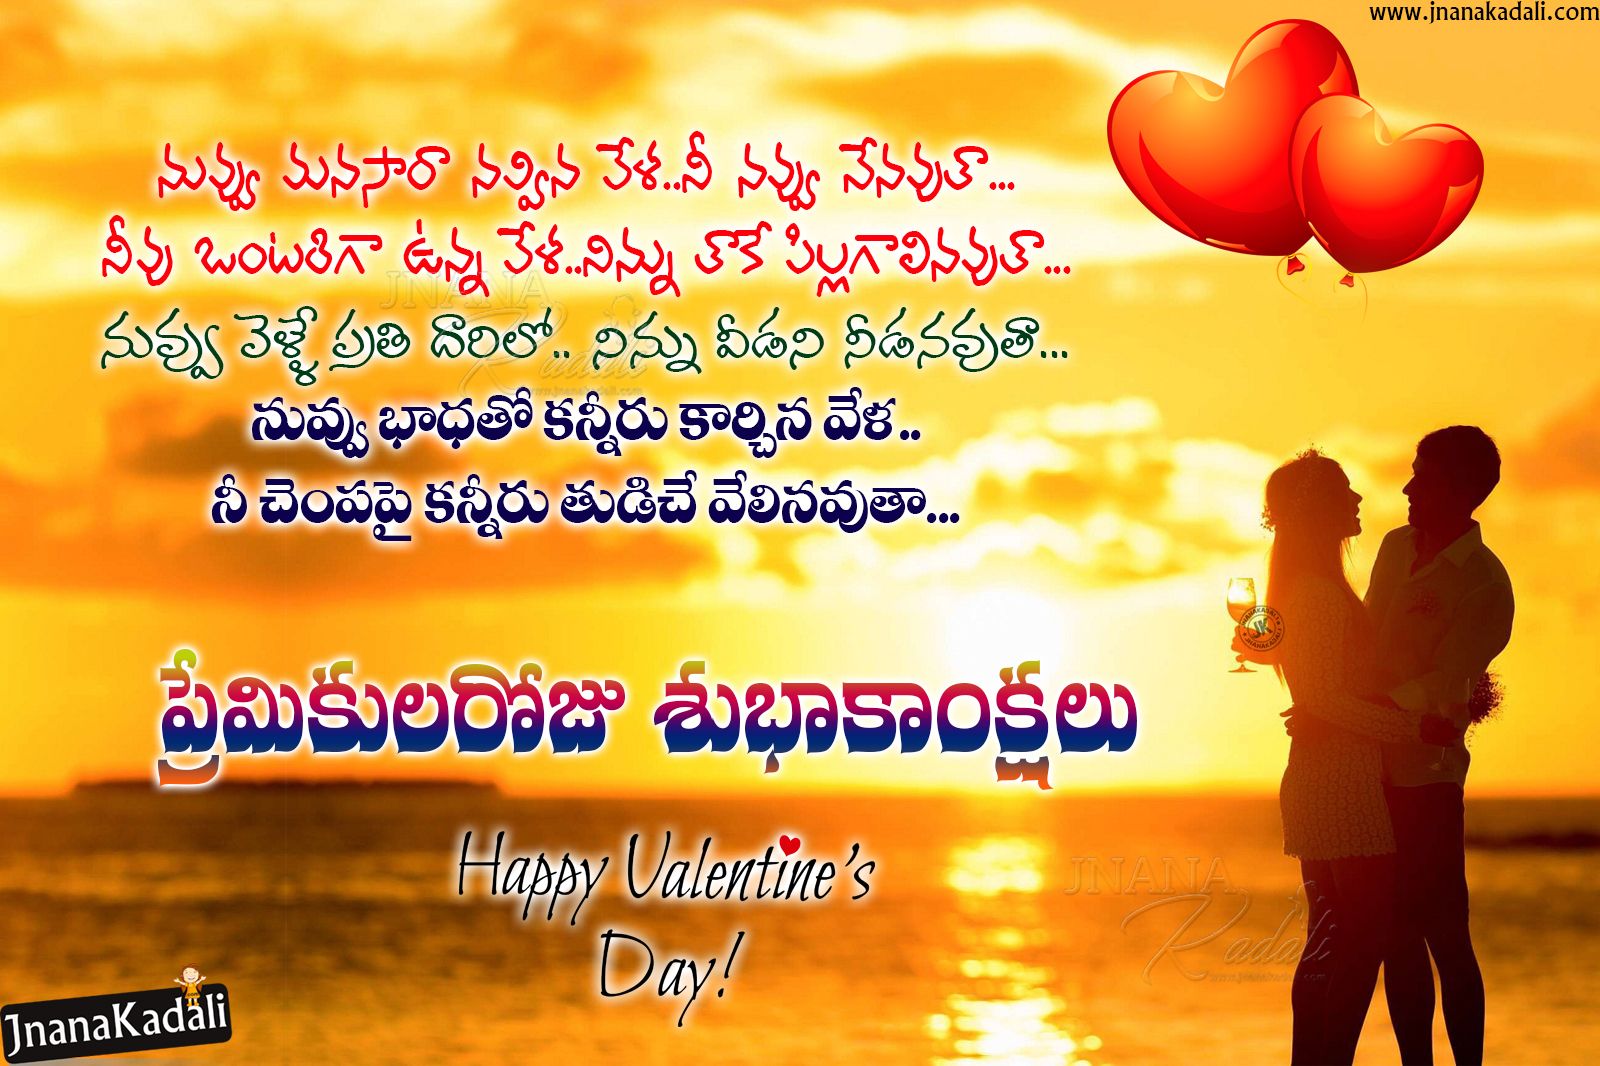 Telugu Valentines Day Greetings Happy Valentines Day Image Poetry In Telugu. JNANA KADALI.COM. Telugu Quotes. English Quotes. Hindi Quotes. Tamil Quotes. Dharmasandehalu